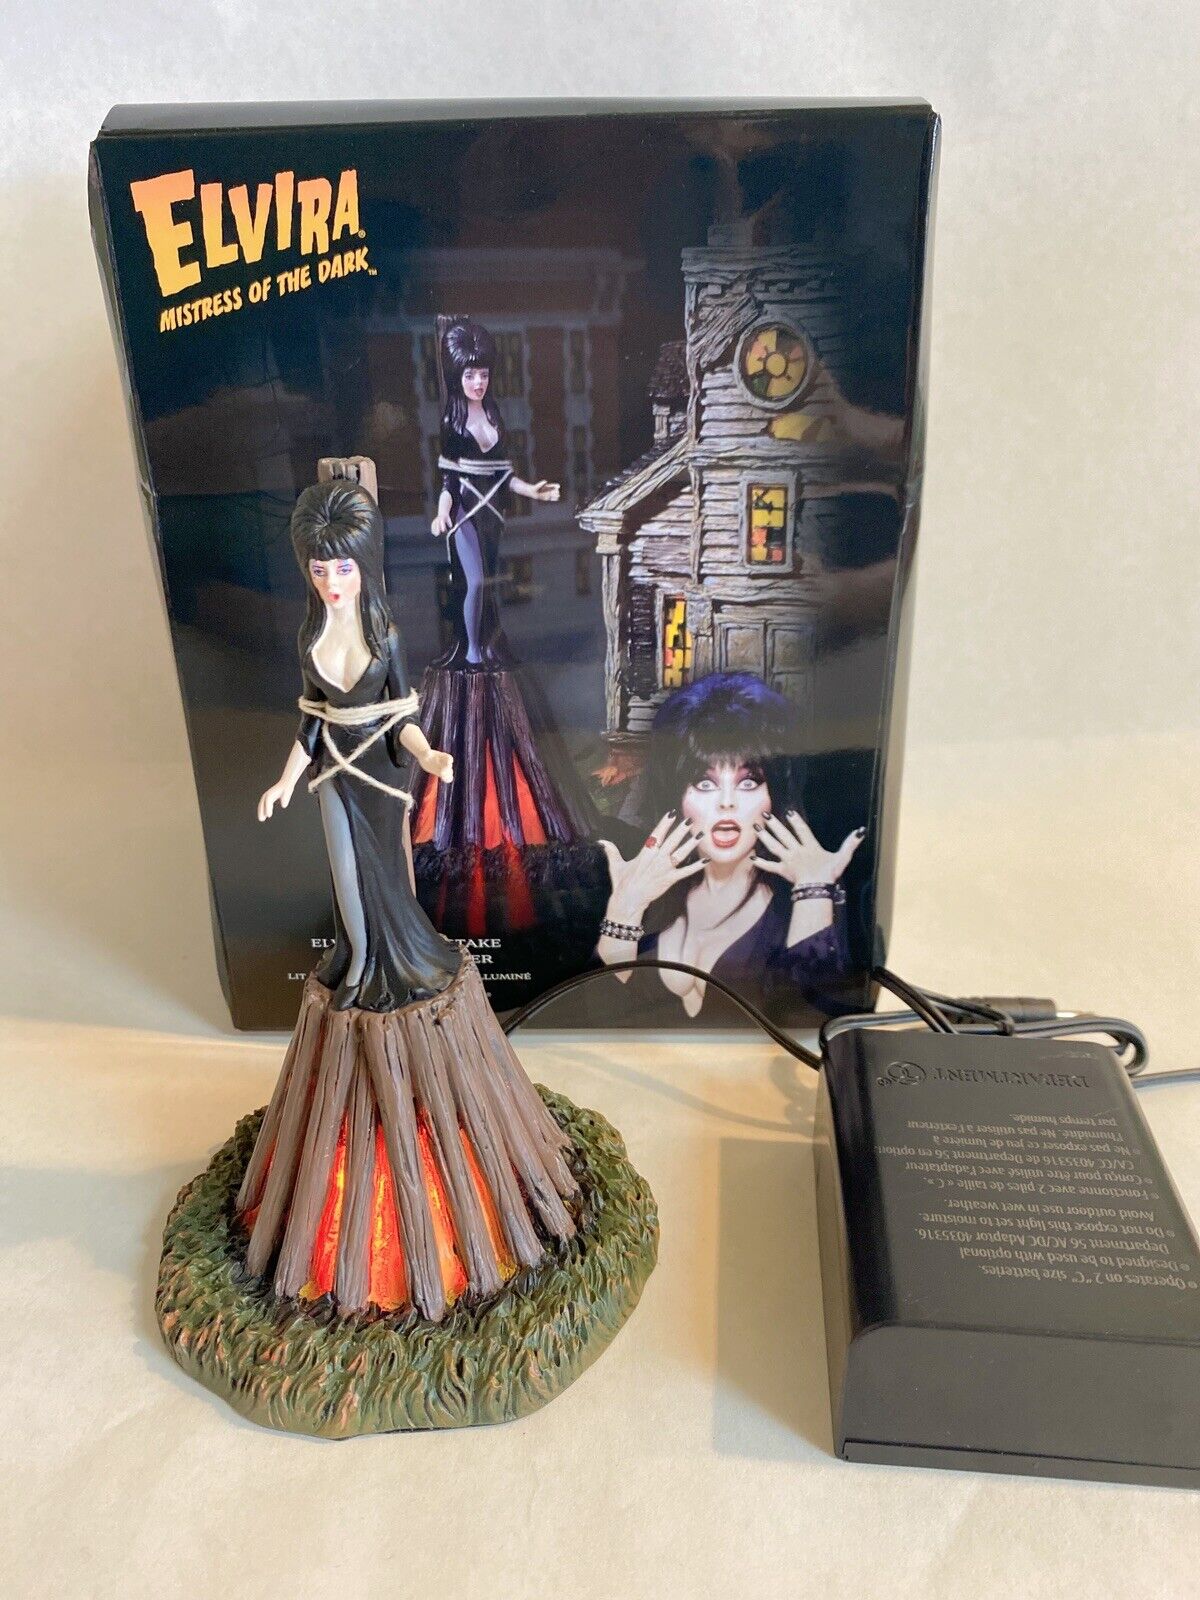 Dept 56 Elvira Mistress Of The Dark “Elvira At The Stake” Figurine 6013670